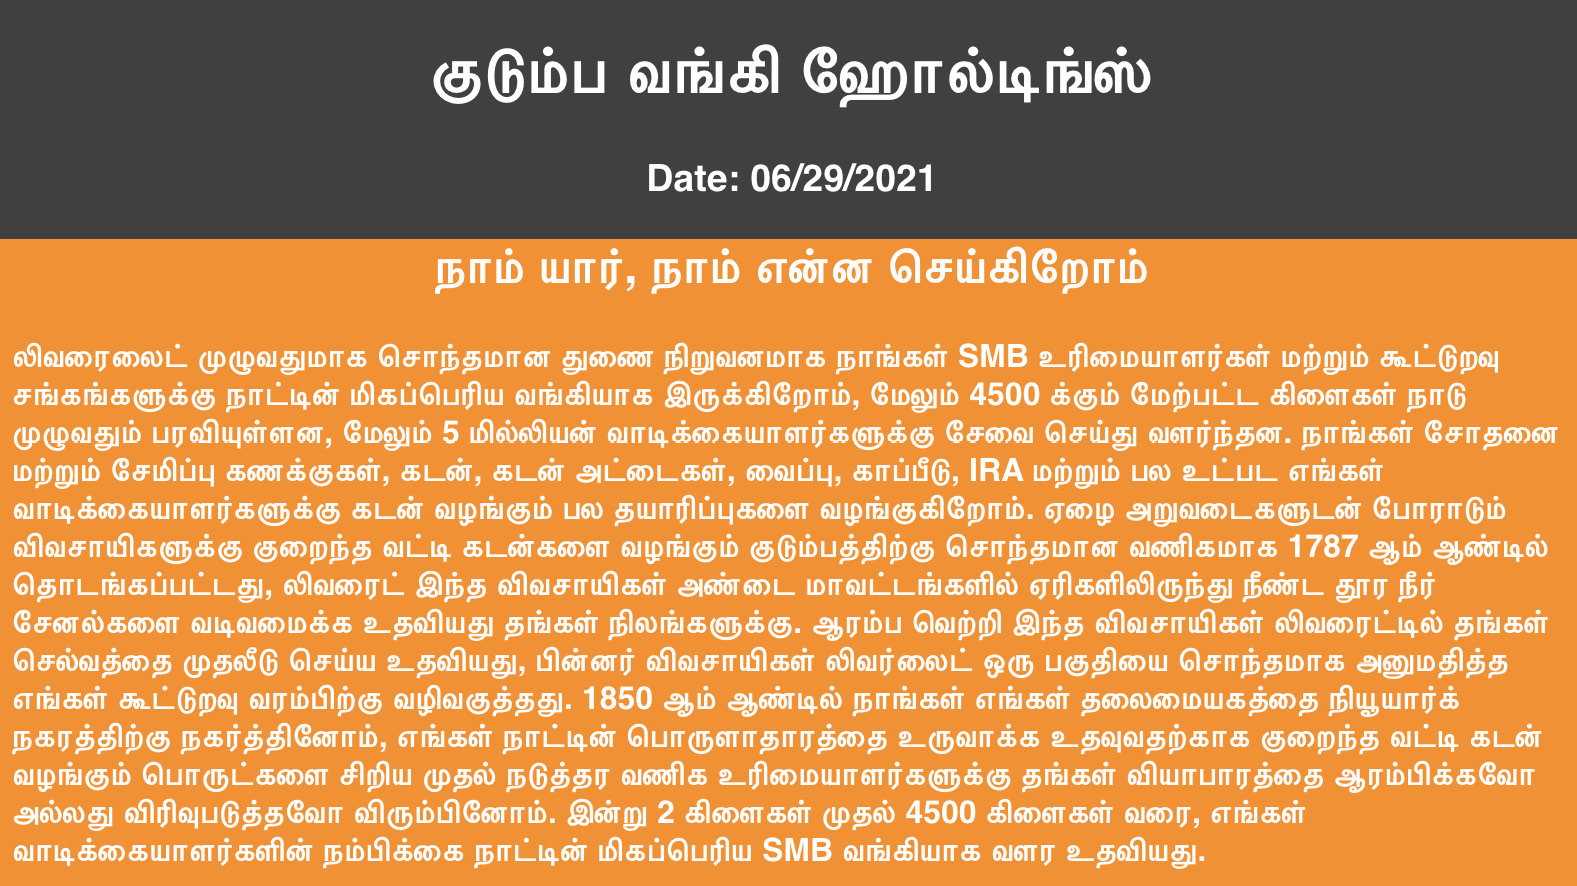 Figure 10.8 – The translated Tamil web page
